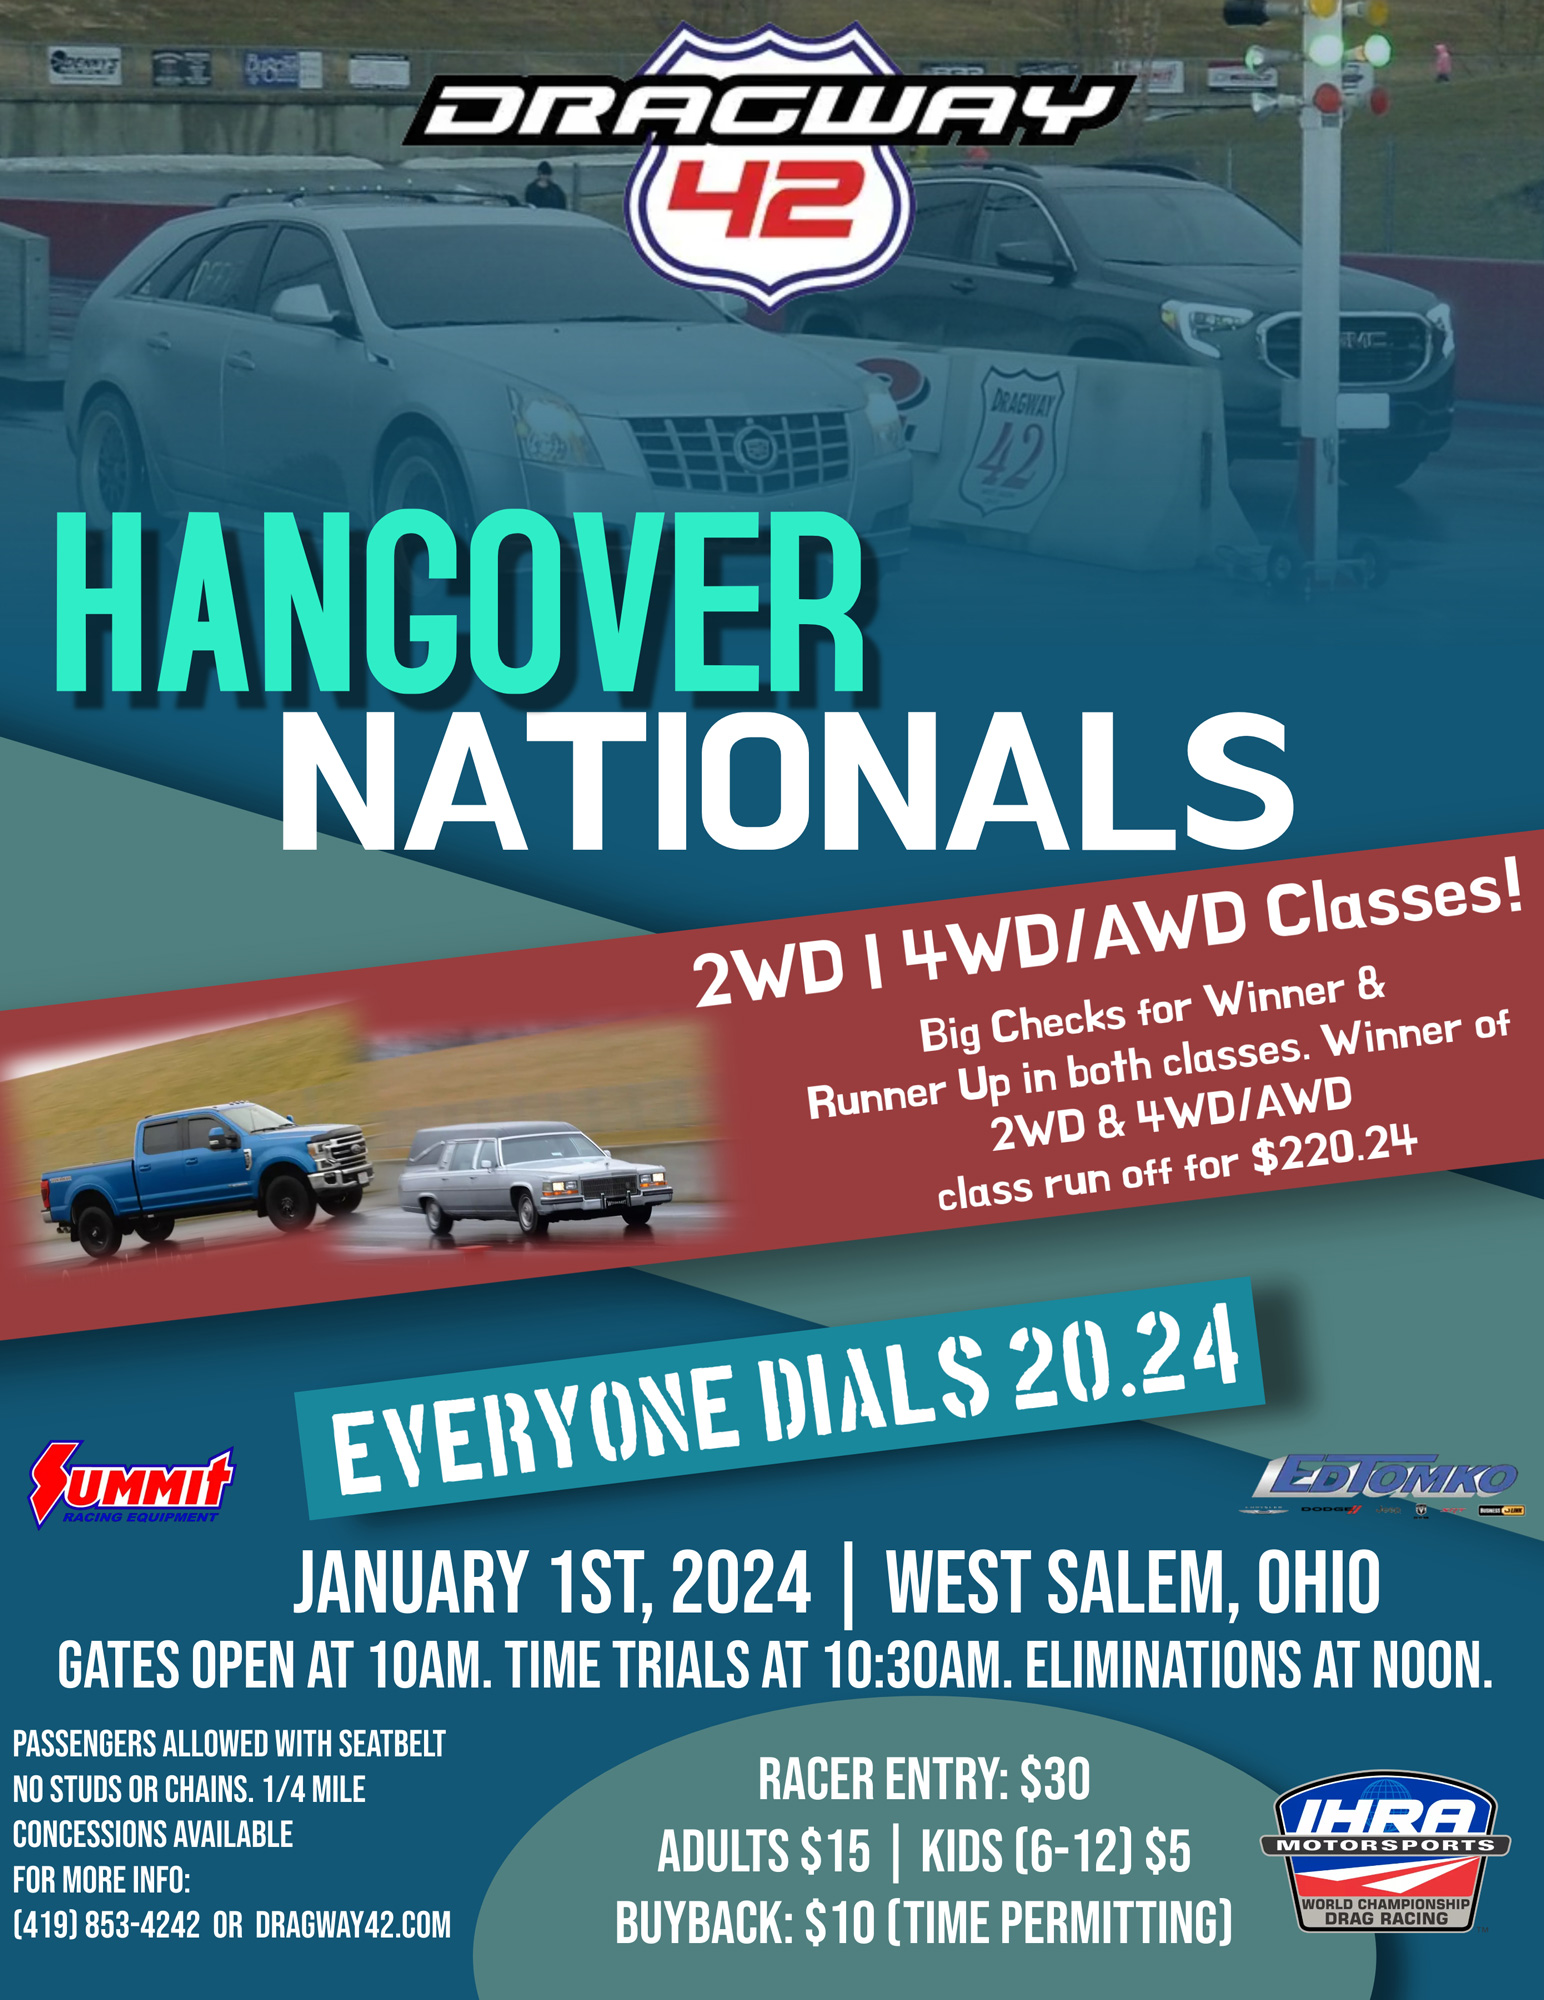 Hangover Nationals Dragway 42